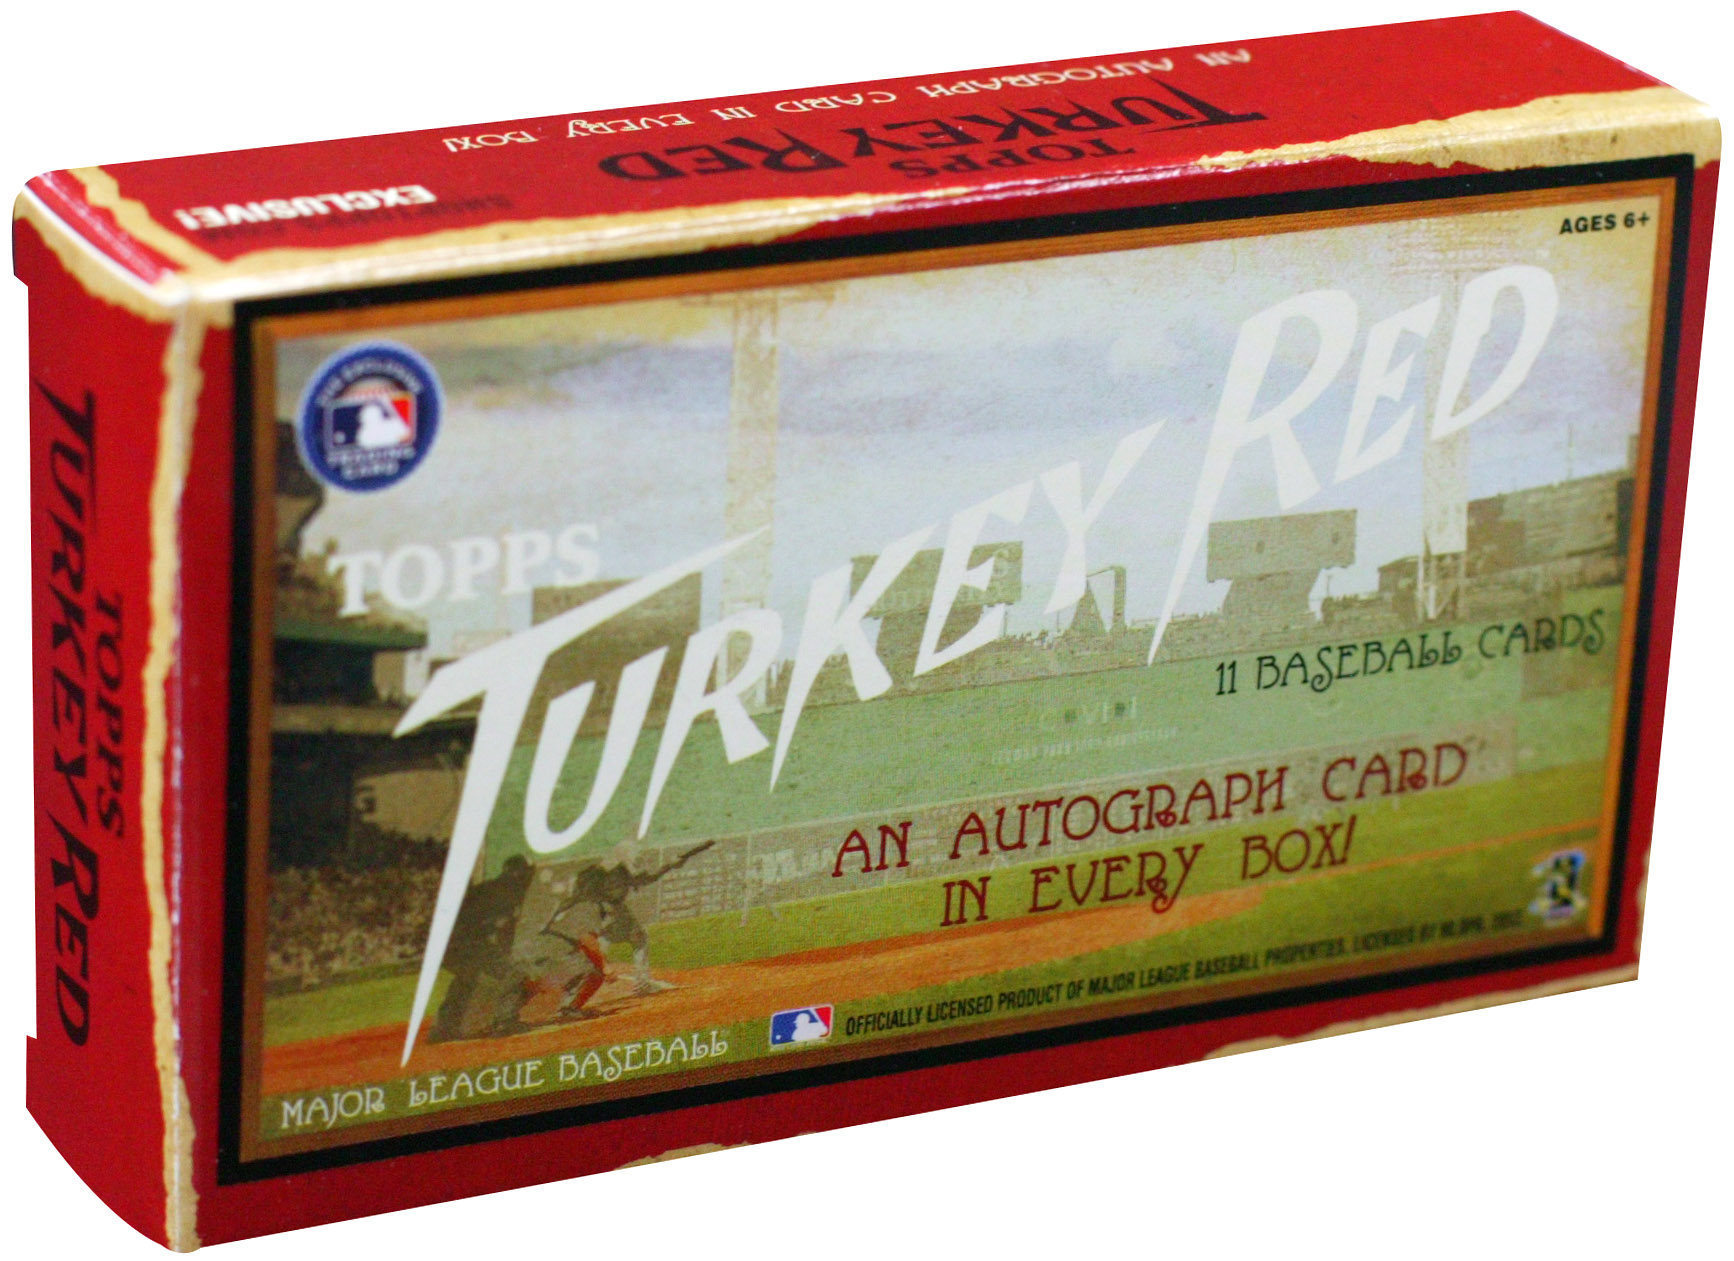 2013 Topps Turkey Red Baseball Hobby Box card image